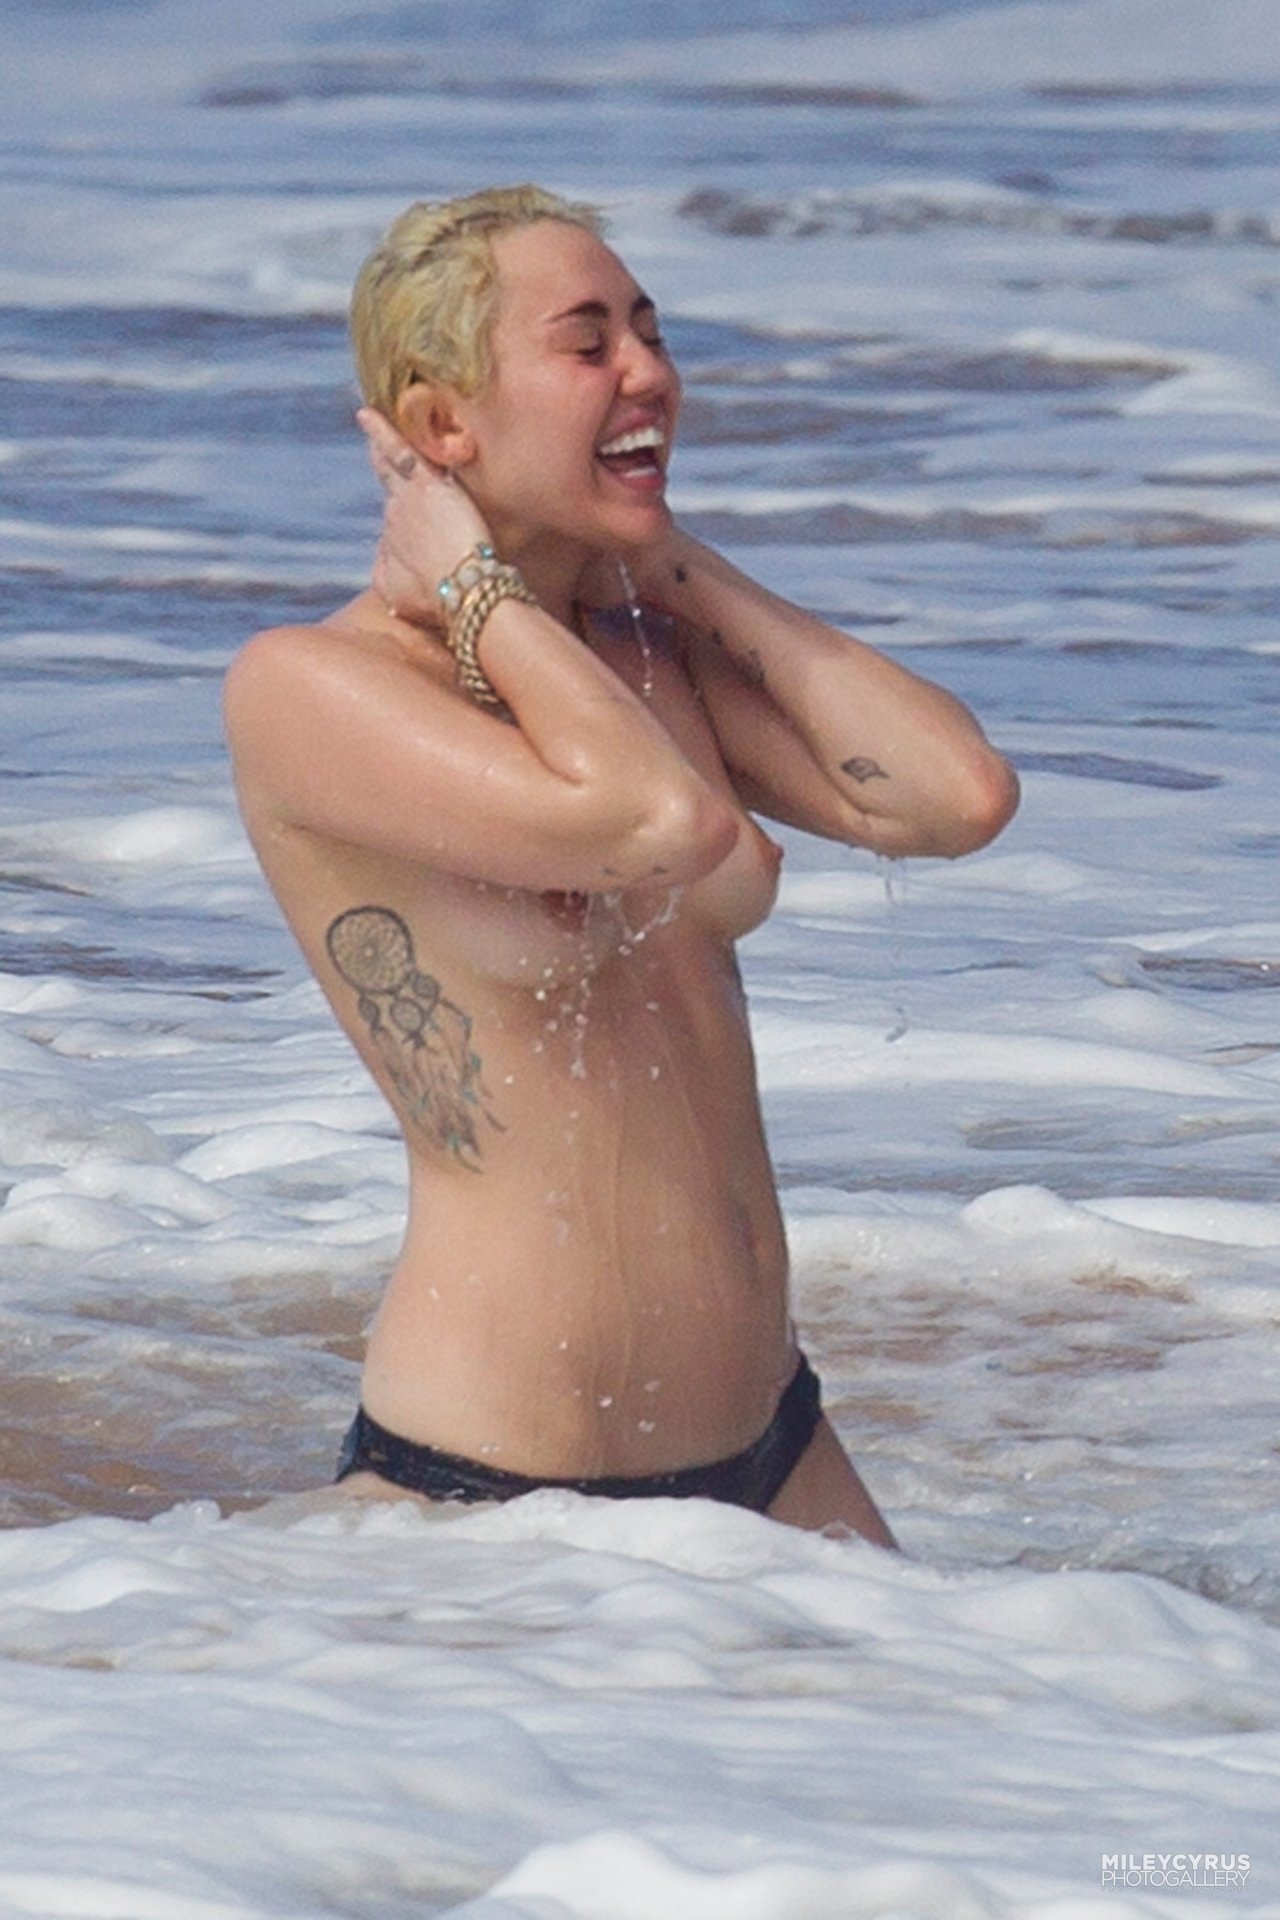 Miley cyrus topless beach